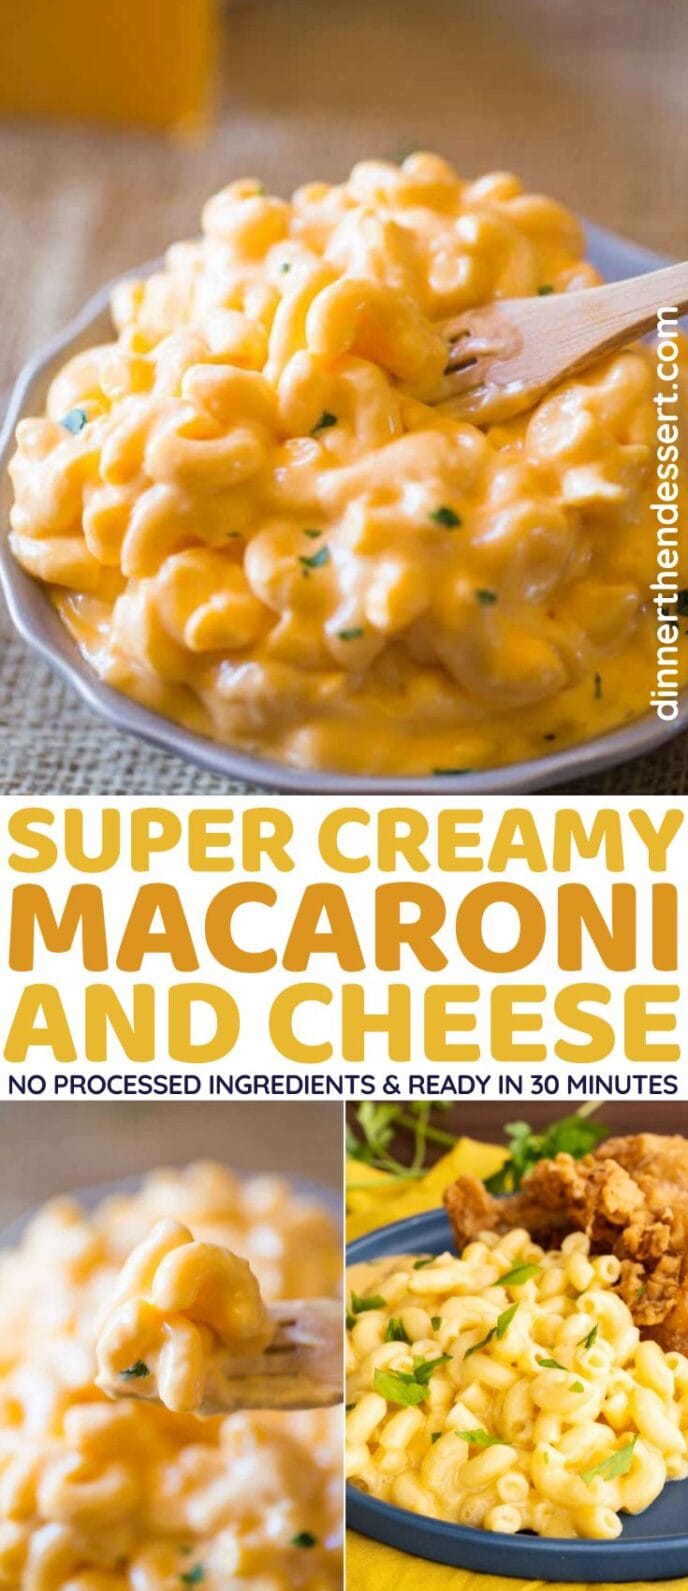 Super Creamy Macaroni and Cheese Collage